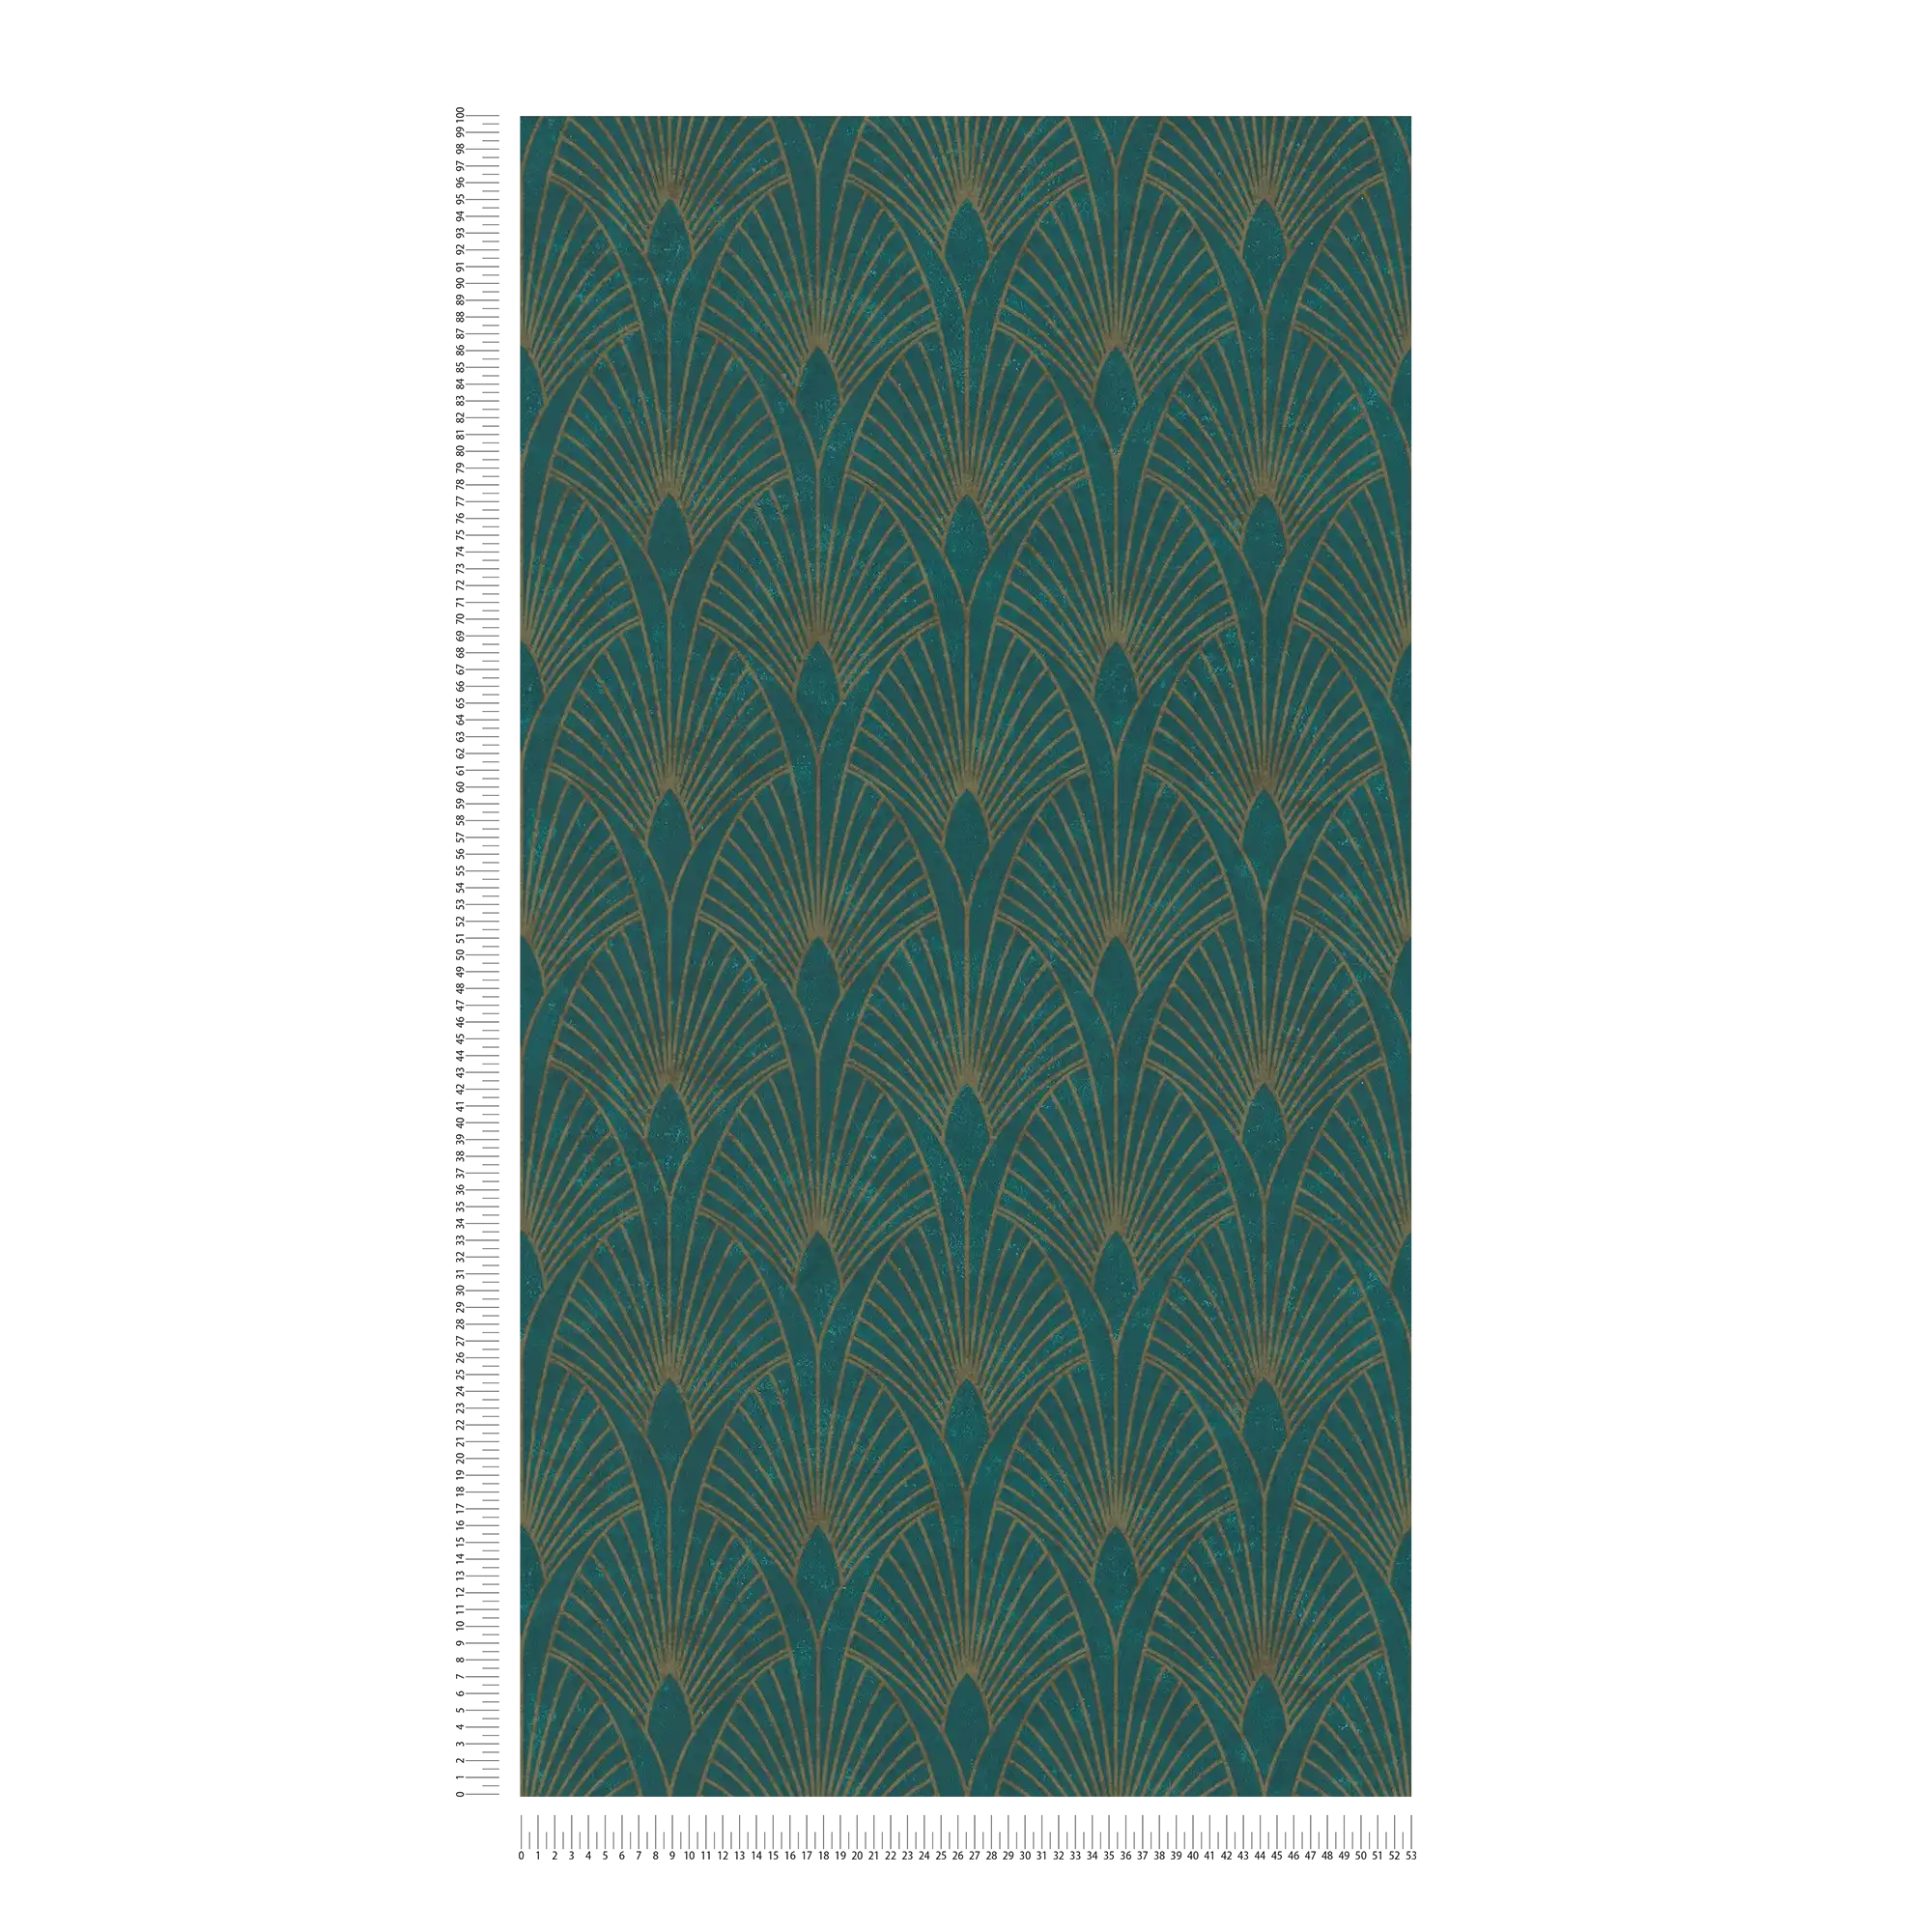             Self-adhesive wallpaper | Art Deco Design with Metallic Effect - Green, Metallic
        